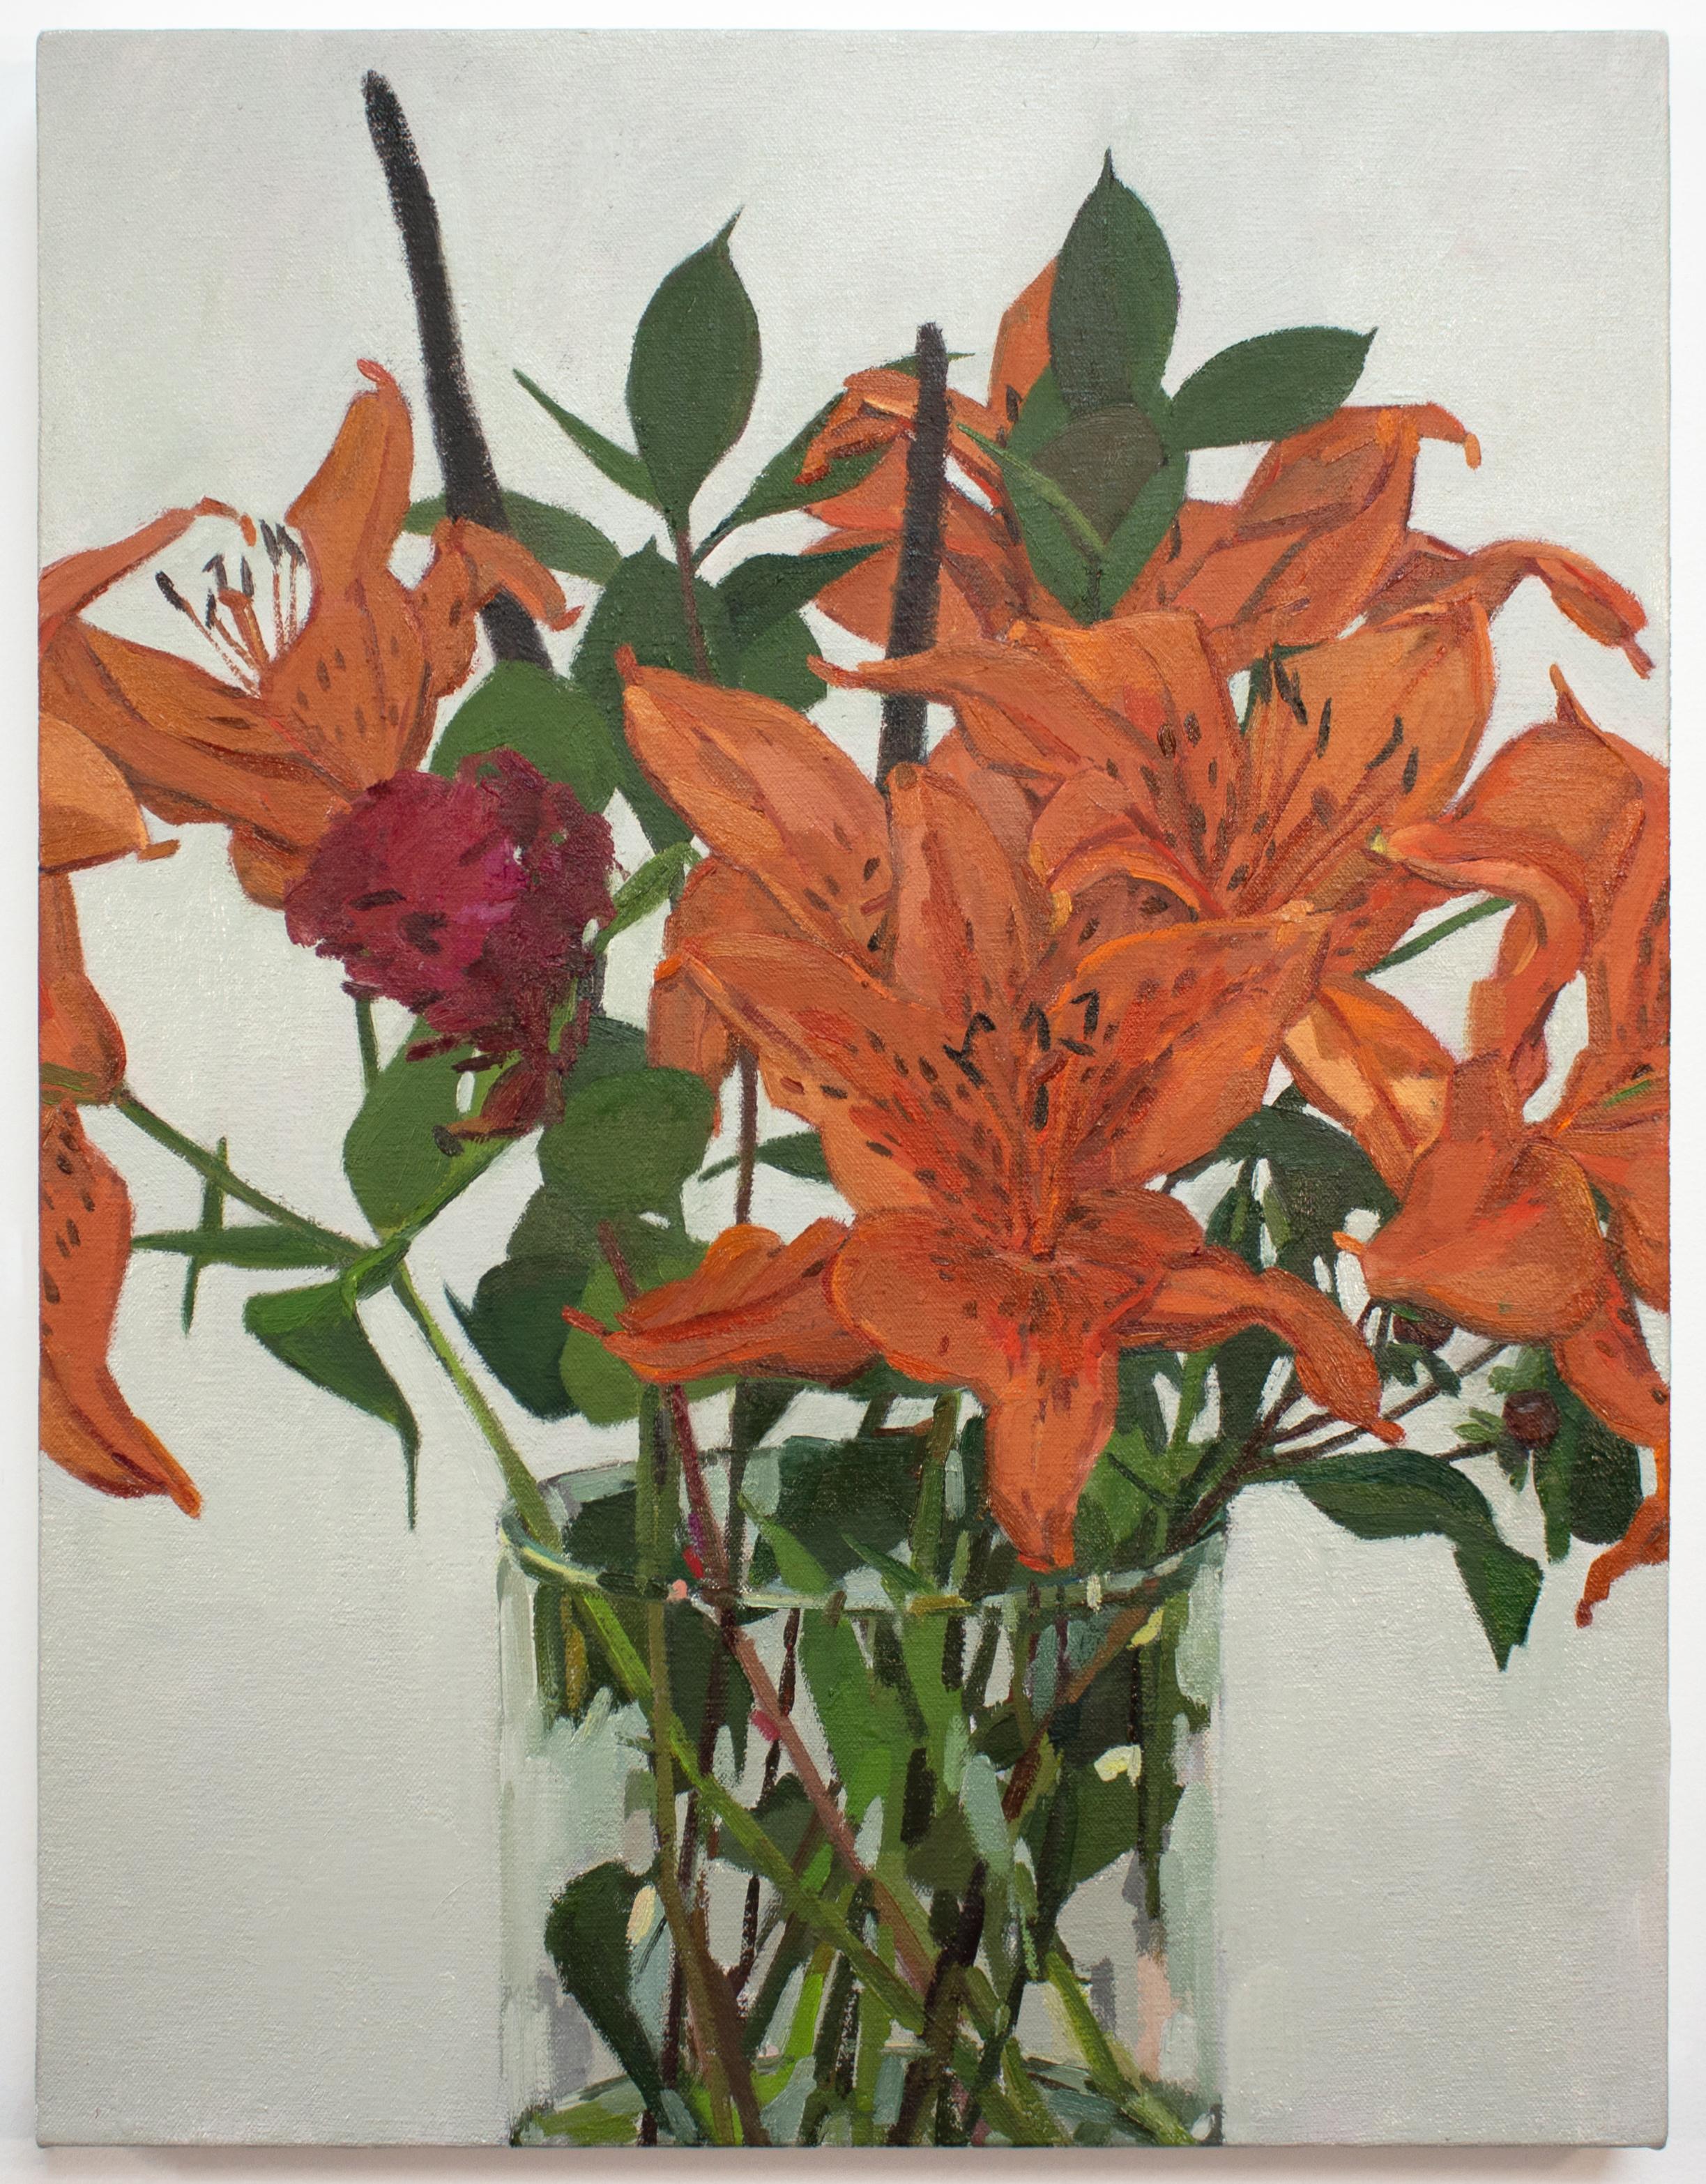 '14 Years (Orange Lilies)' - still life - floral, orange, impressionism - Painting by Christina Renfer Vogel